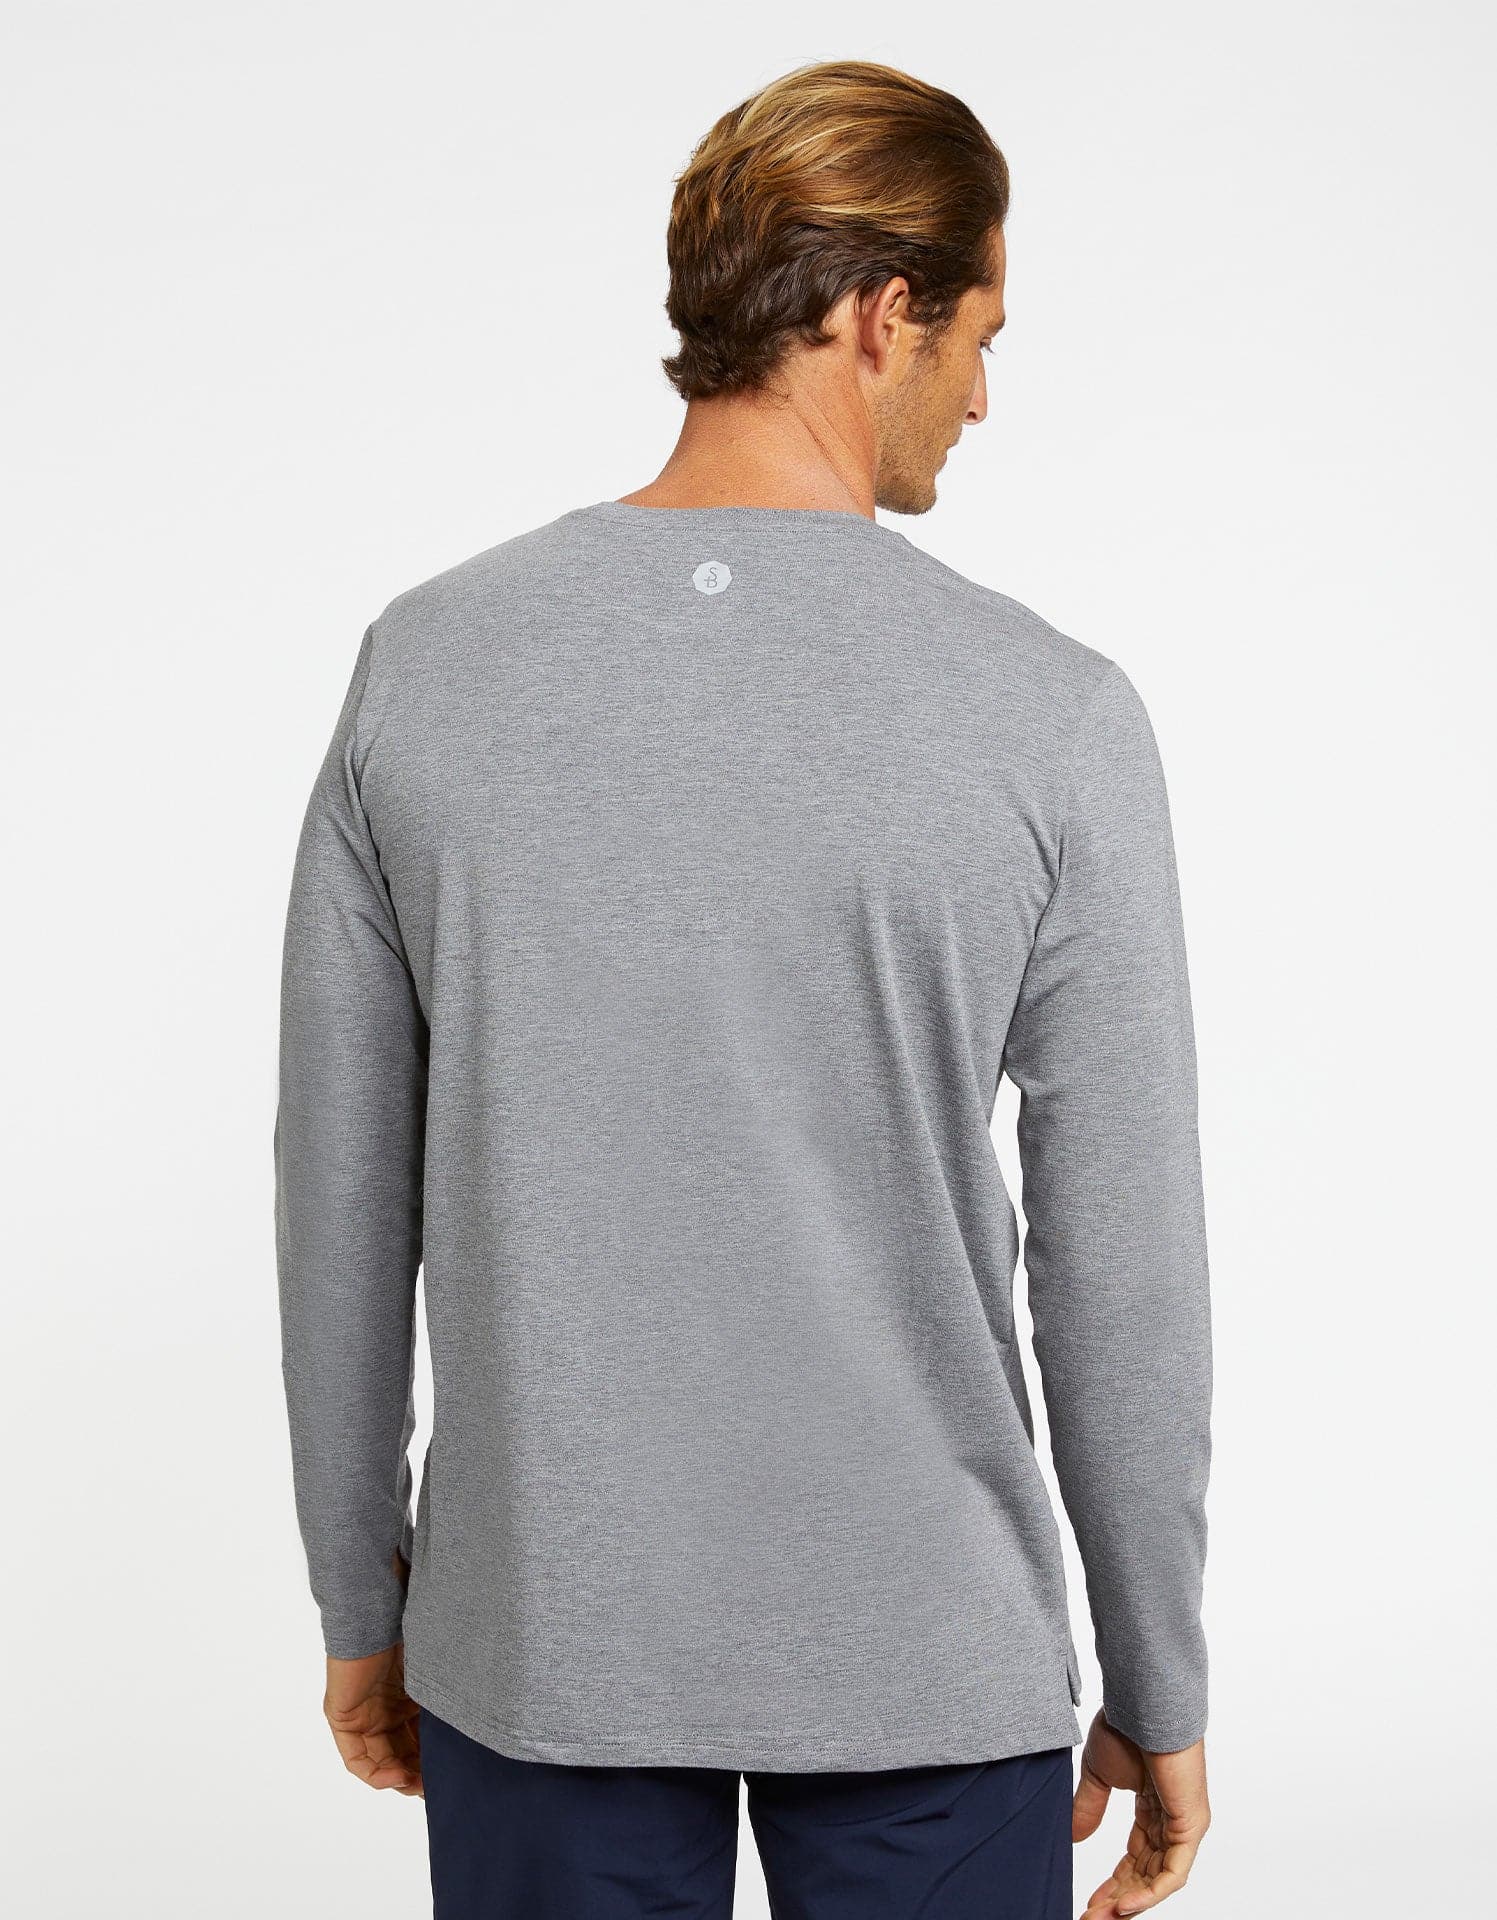 Sun Protective Long Sleeve T-Shirt for Men | UPF 50+ Sun Protection White